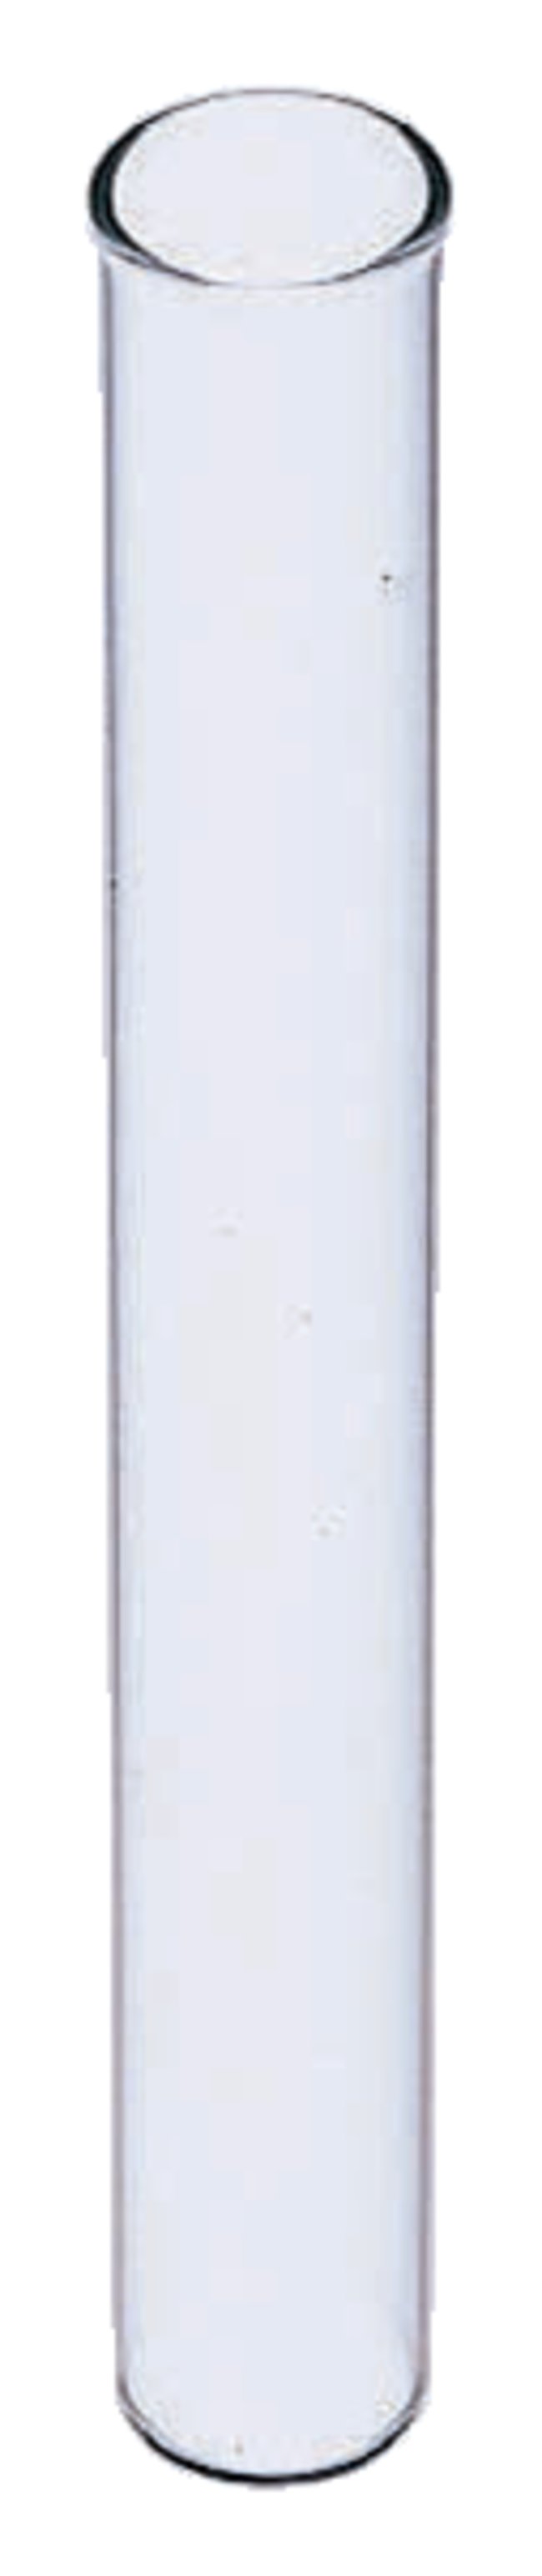 Disposable Borosilicate Glass Tubes with Plain End